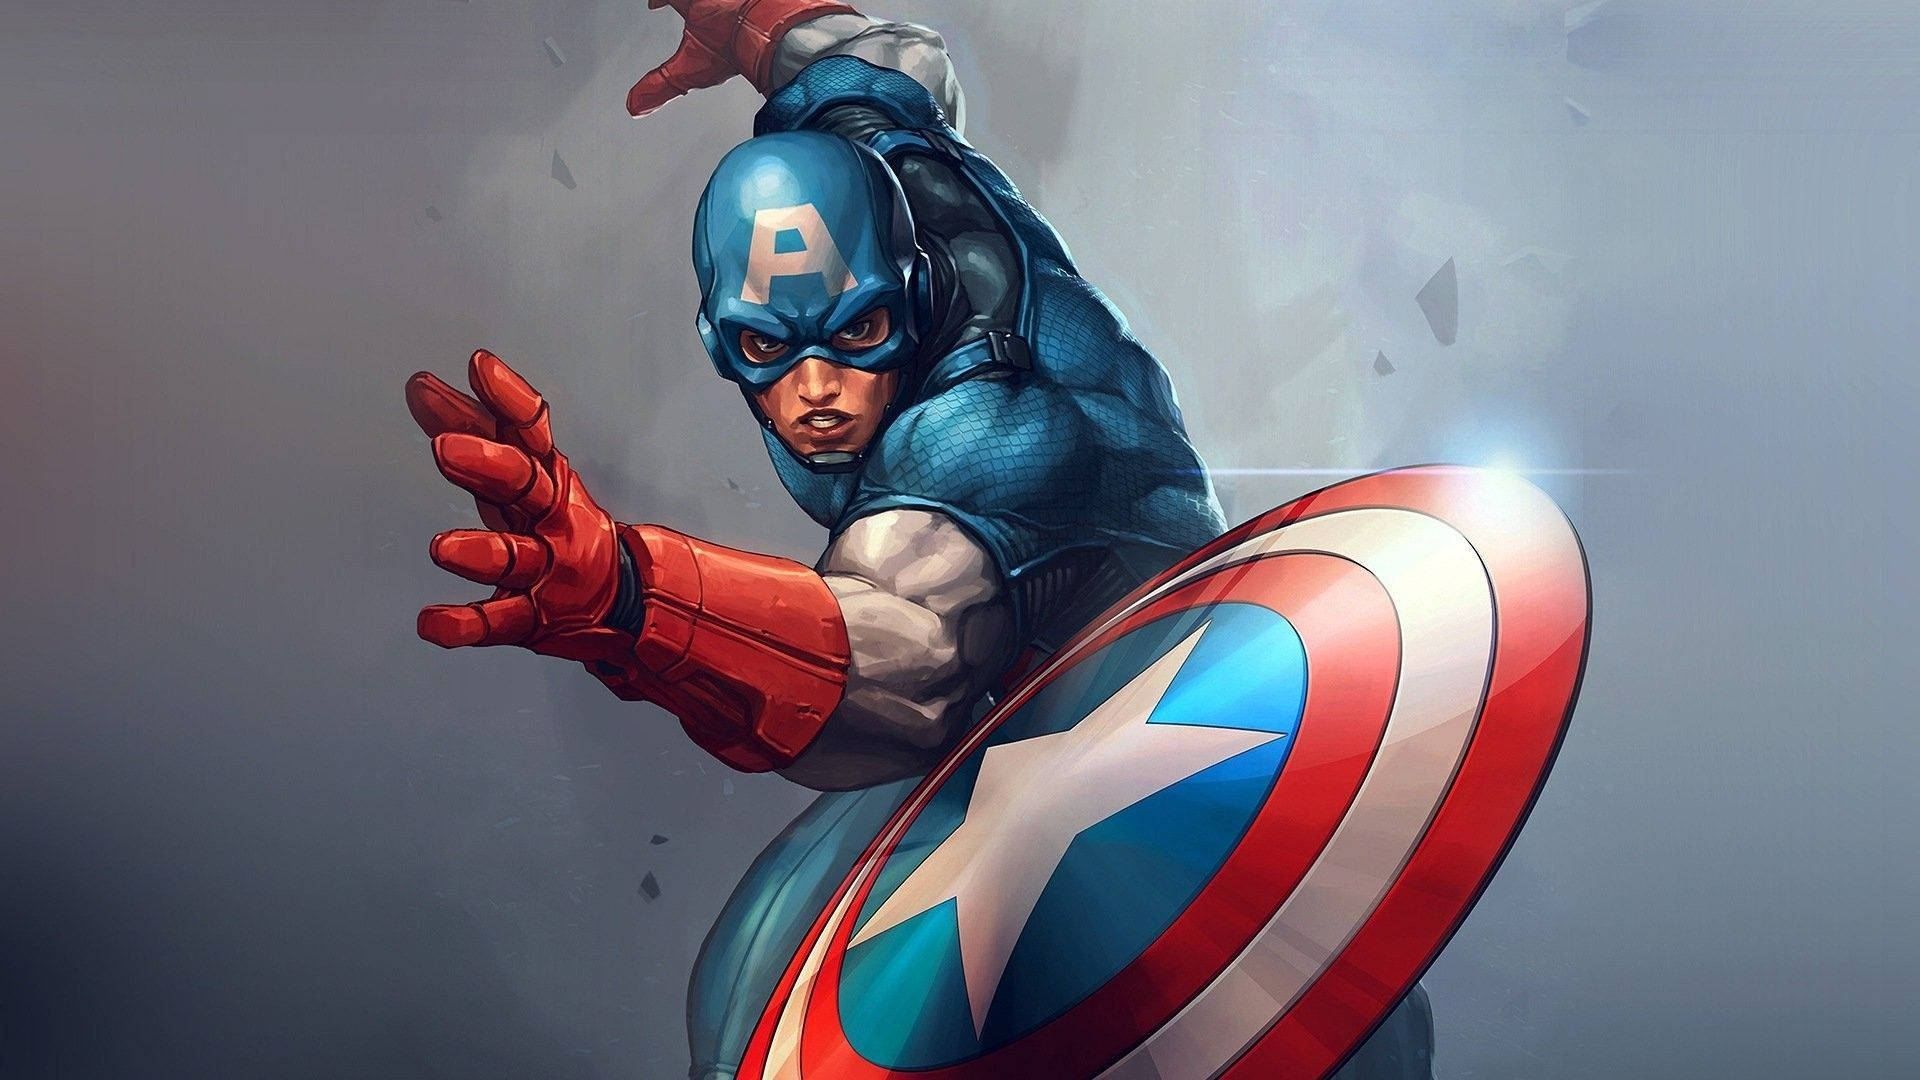 Captain America Superhero Comic-style Artwork Background